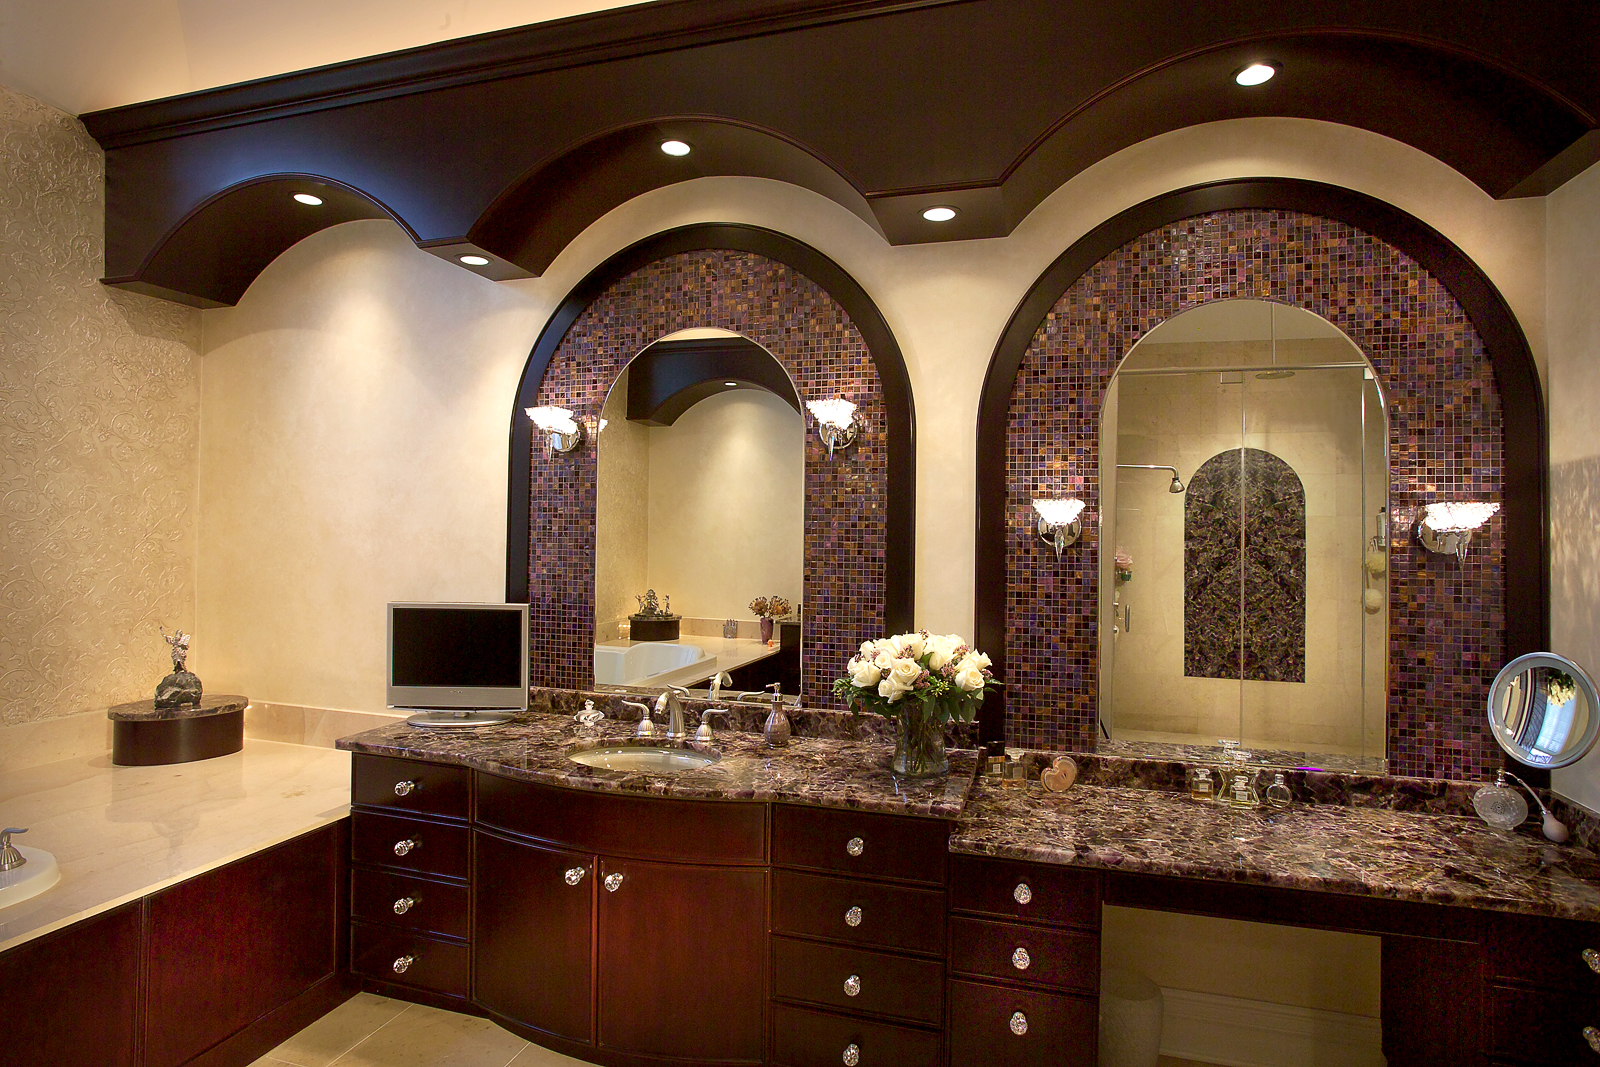 custom cabinetry, glass mosaics, precious stone